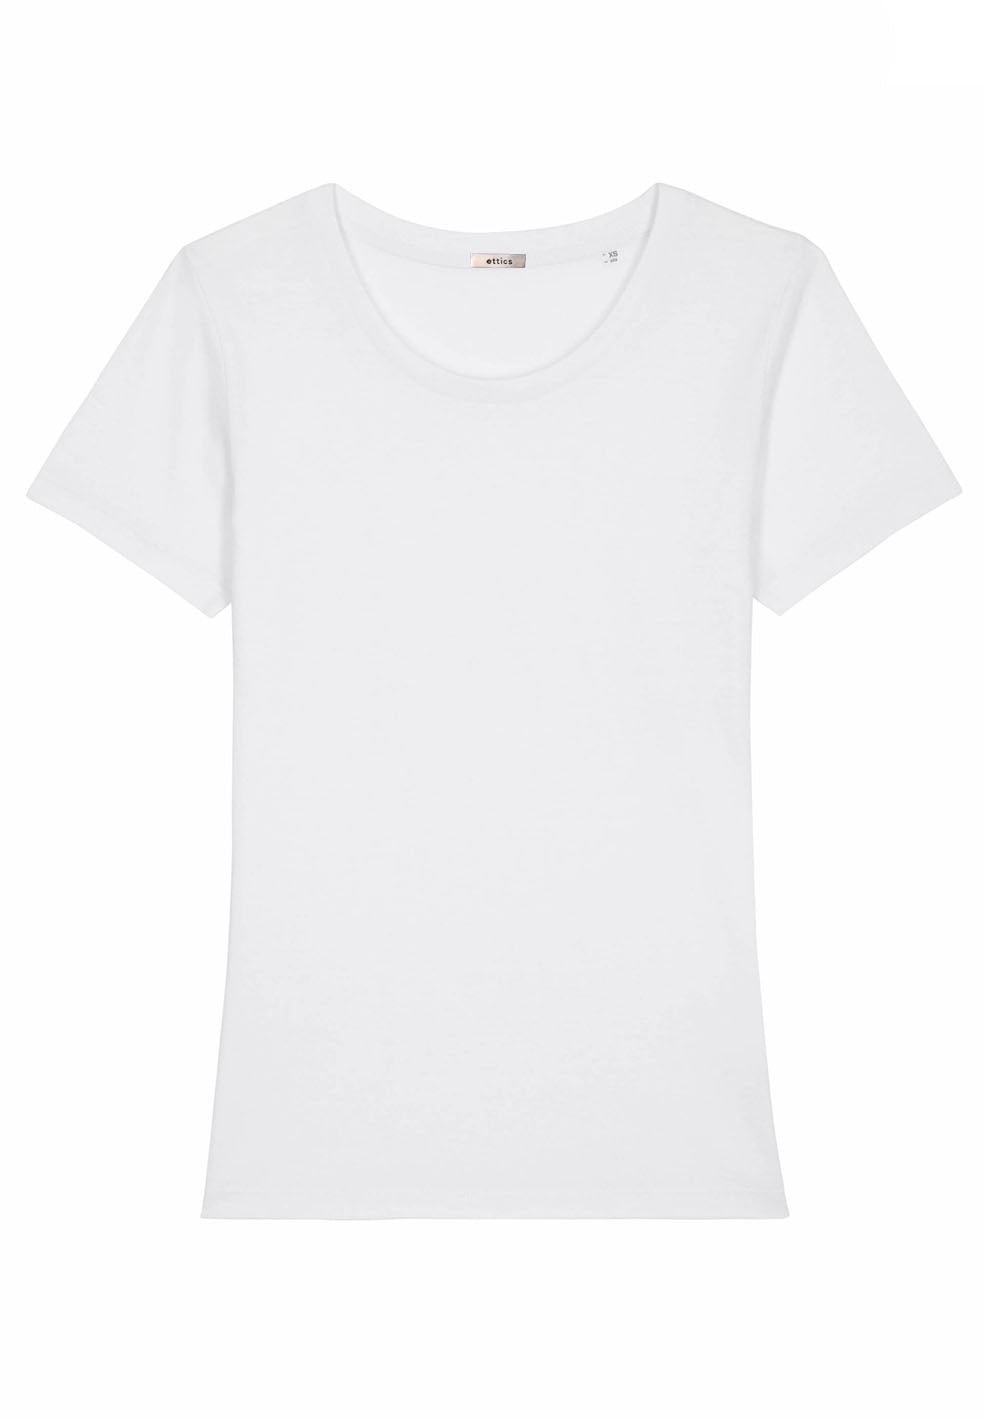 expresser white t-shirt